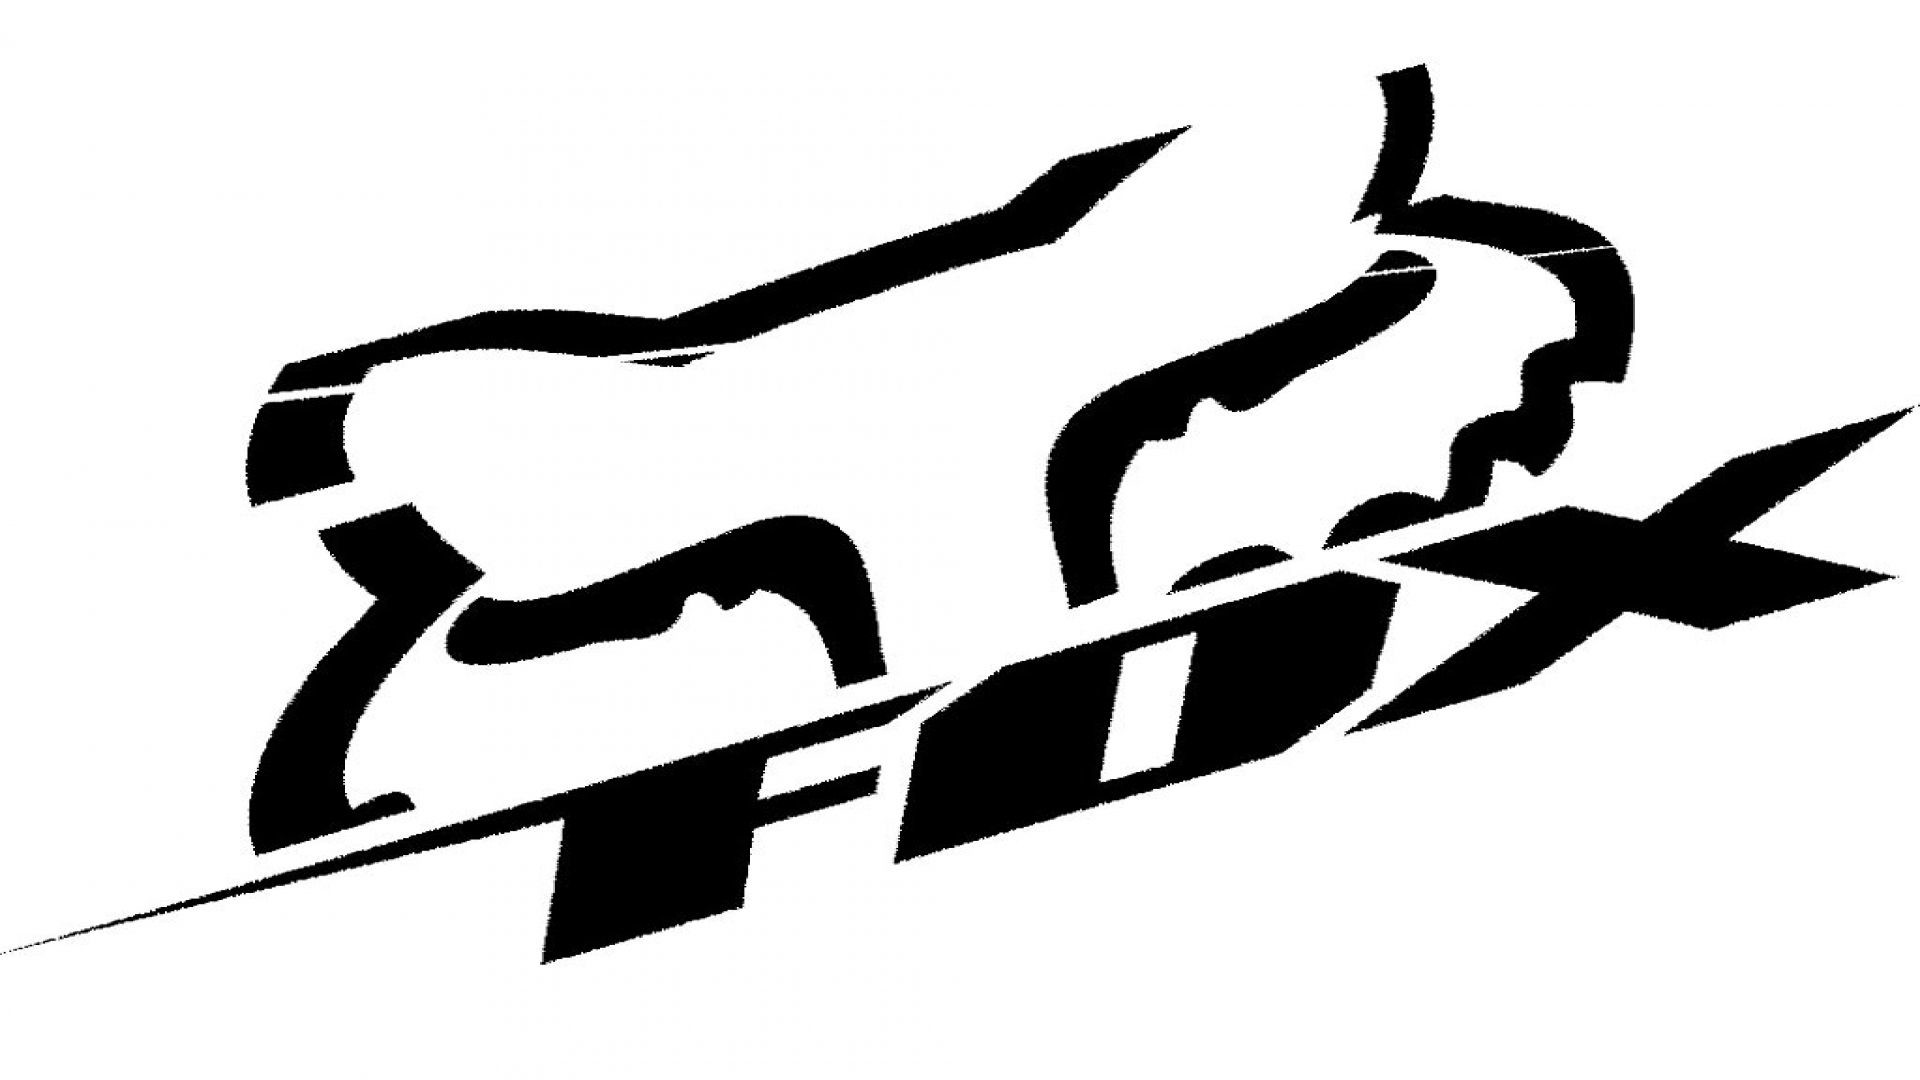 1920x1080 Fox racing logo wallpaper for iphone - photo#26